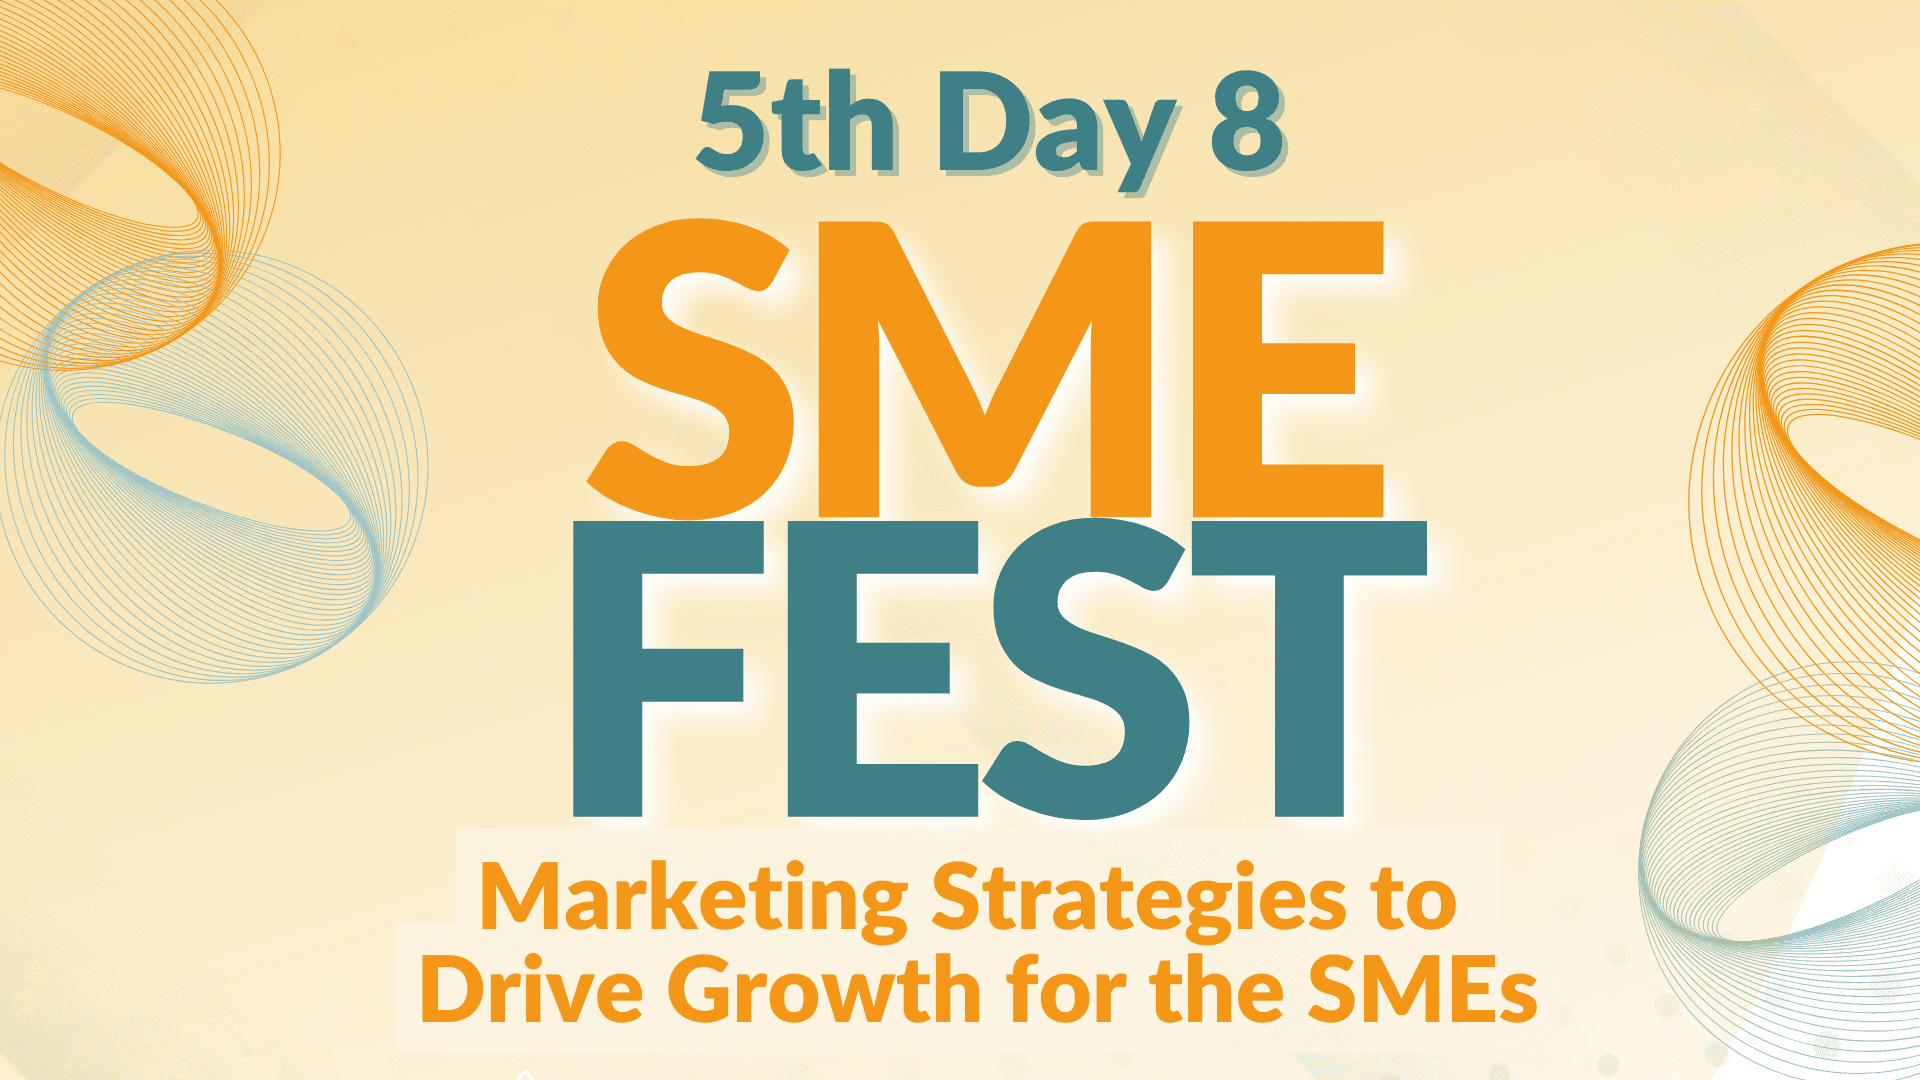 5th Day 8 SME Fest